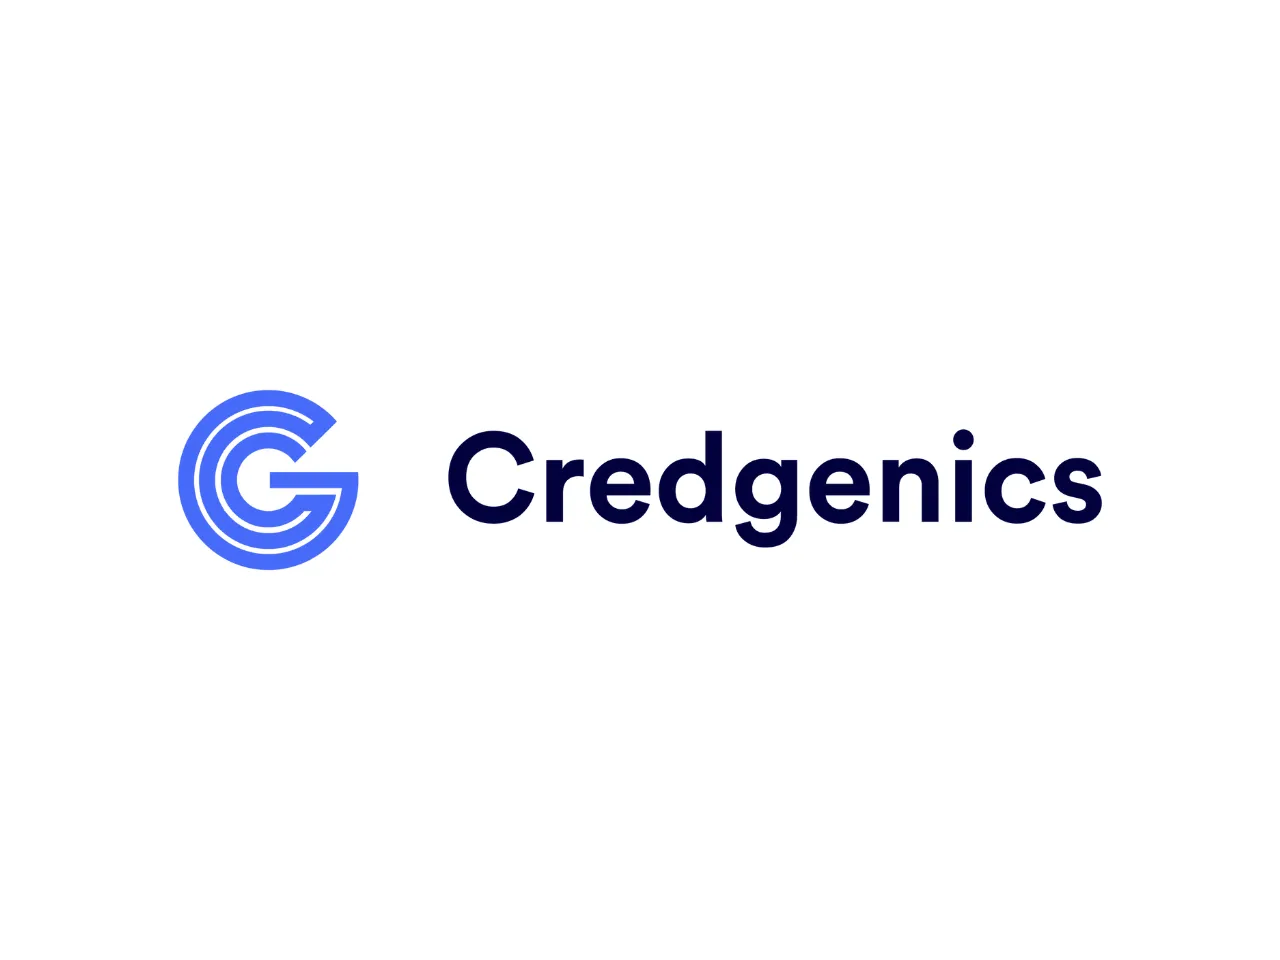 Credgenics Logo